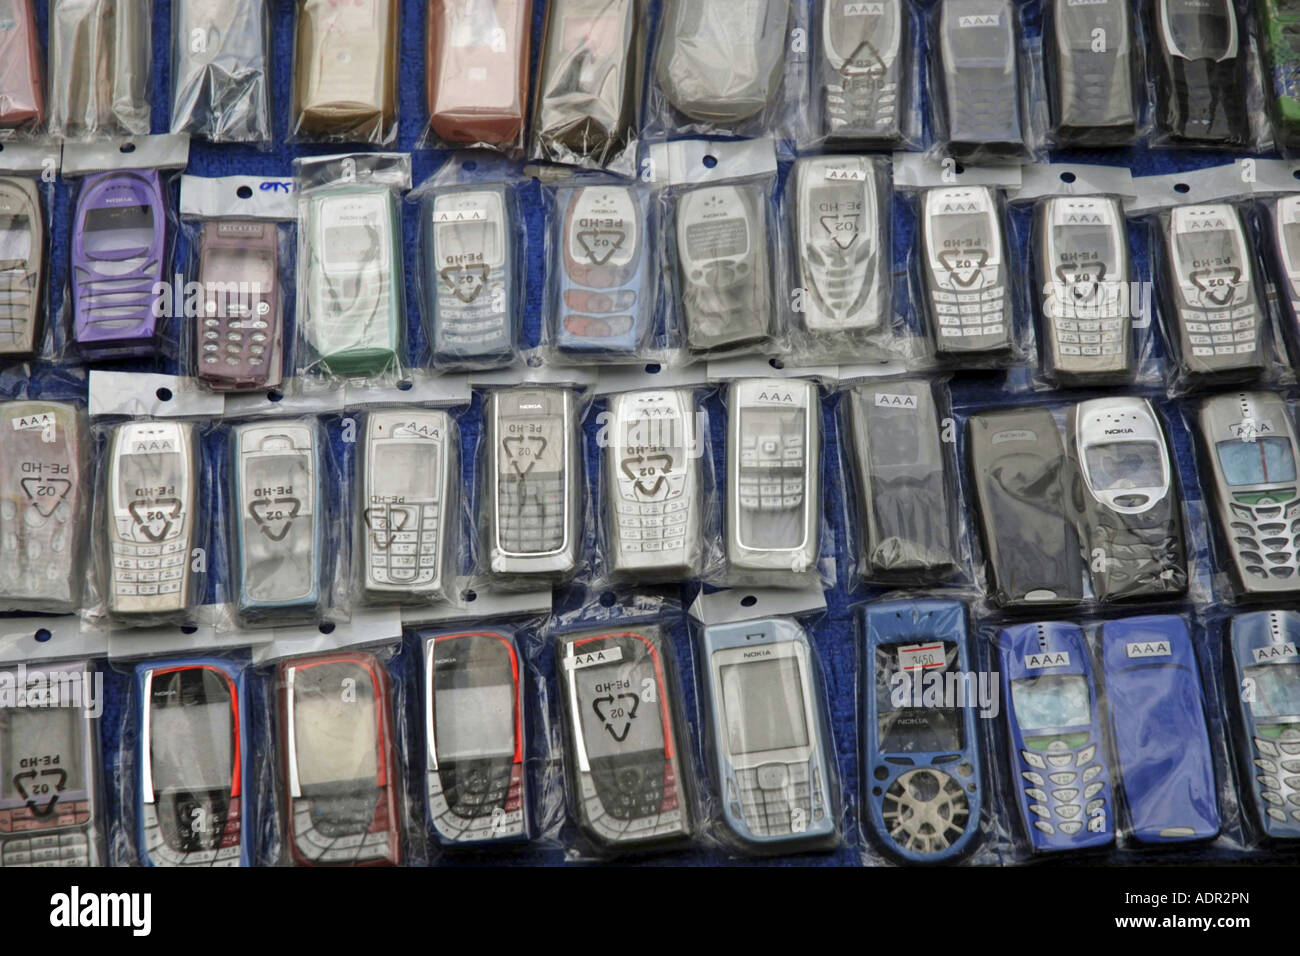 Flea-market in Bangkok, selling of mobil pphones, Thailand, Bangkok Stock Photo